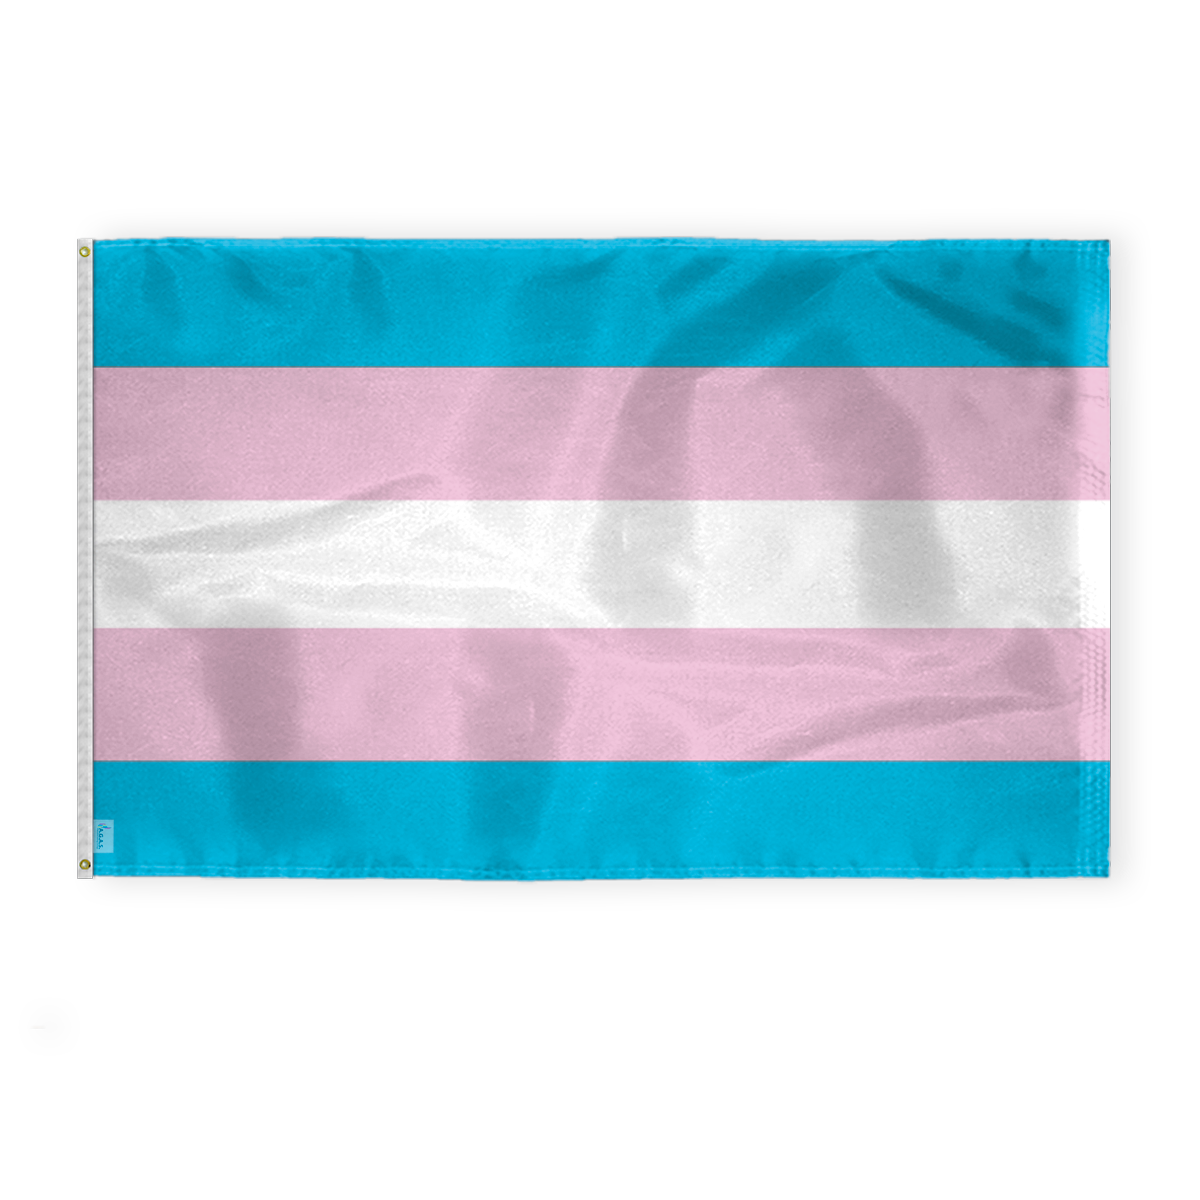 AGAS Transgender Flag 5x8 Ft - Double Sided Printed 200D Nylon